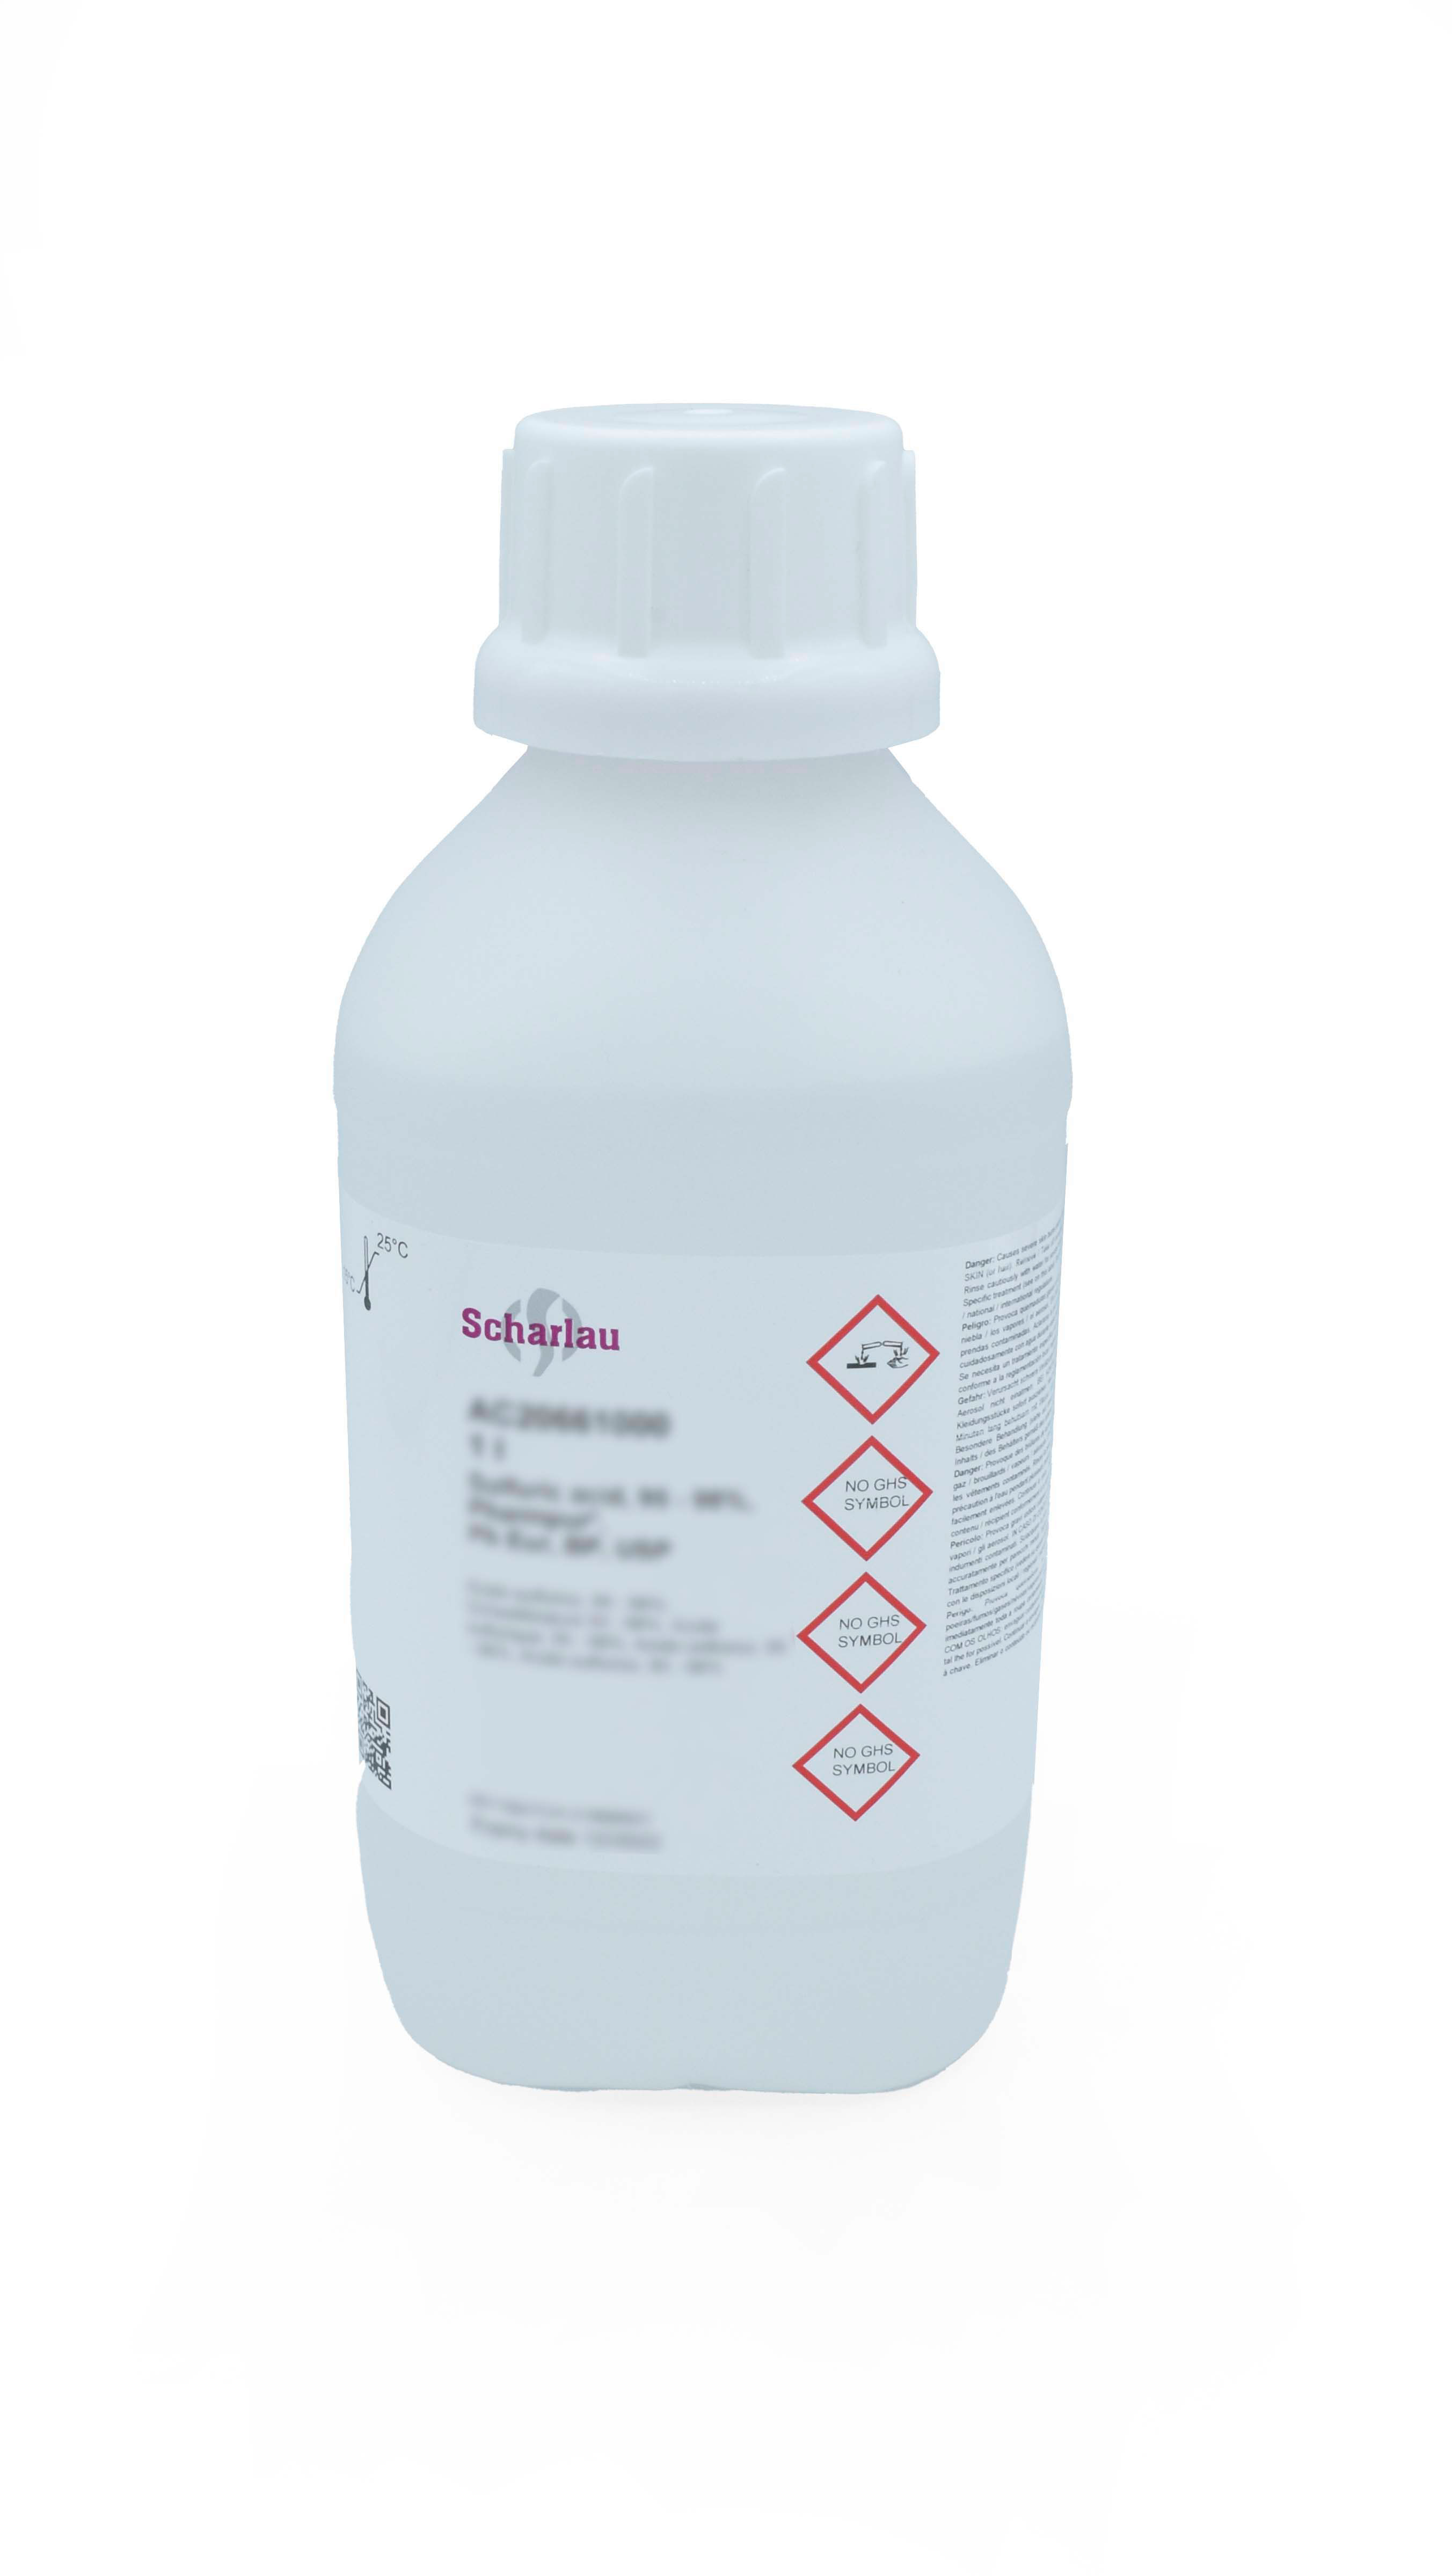 Sulfuric acid, 95 - 98%, Pharmpur®, Ph Eur, BP, USP, packed in HDPE bottles